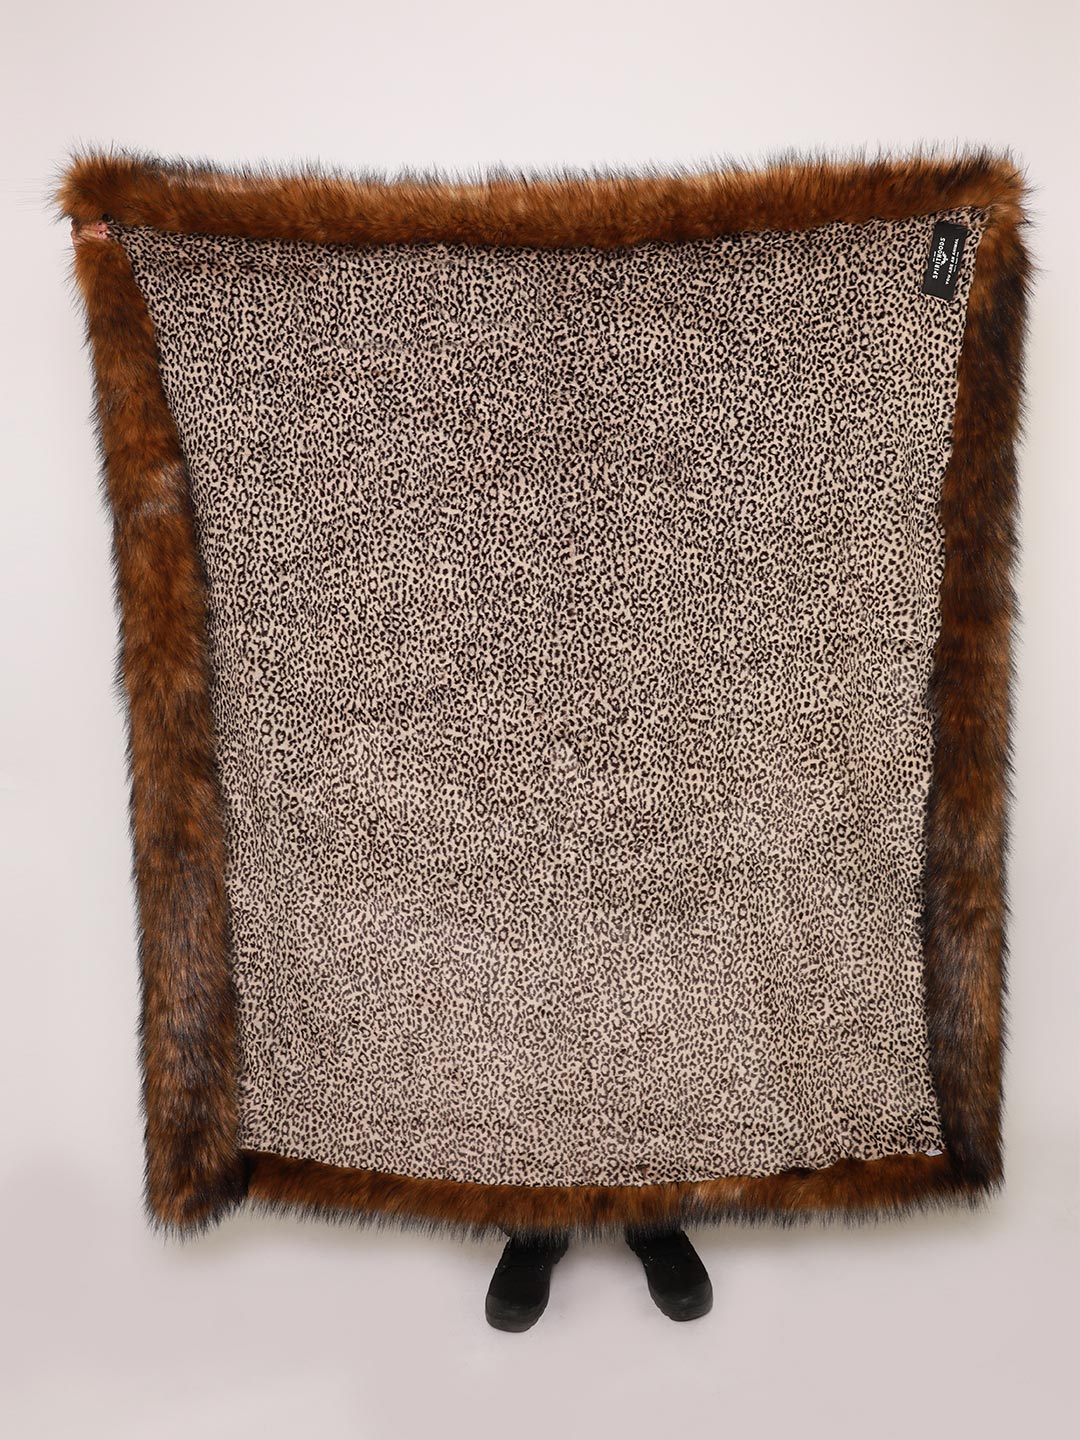 Faux Fur Throw Blanket with Kodiak Bear Design